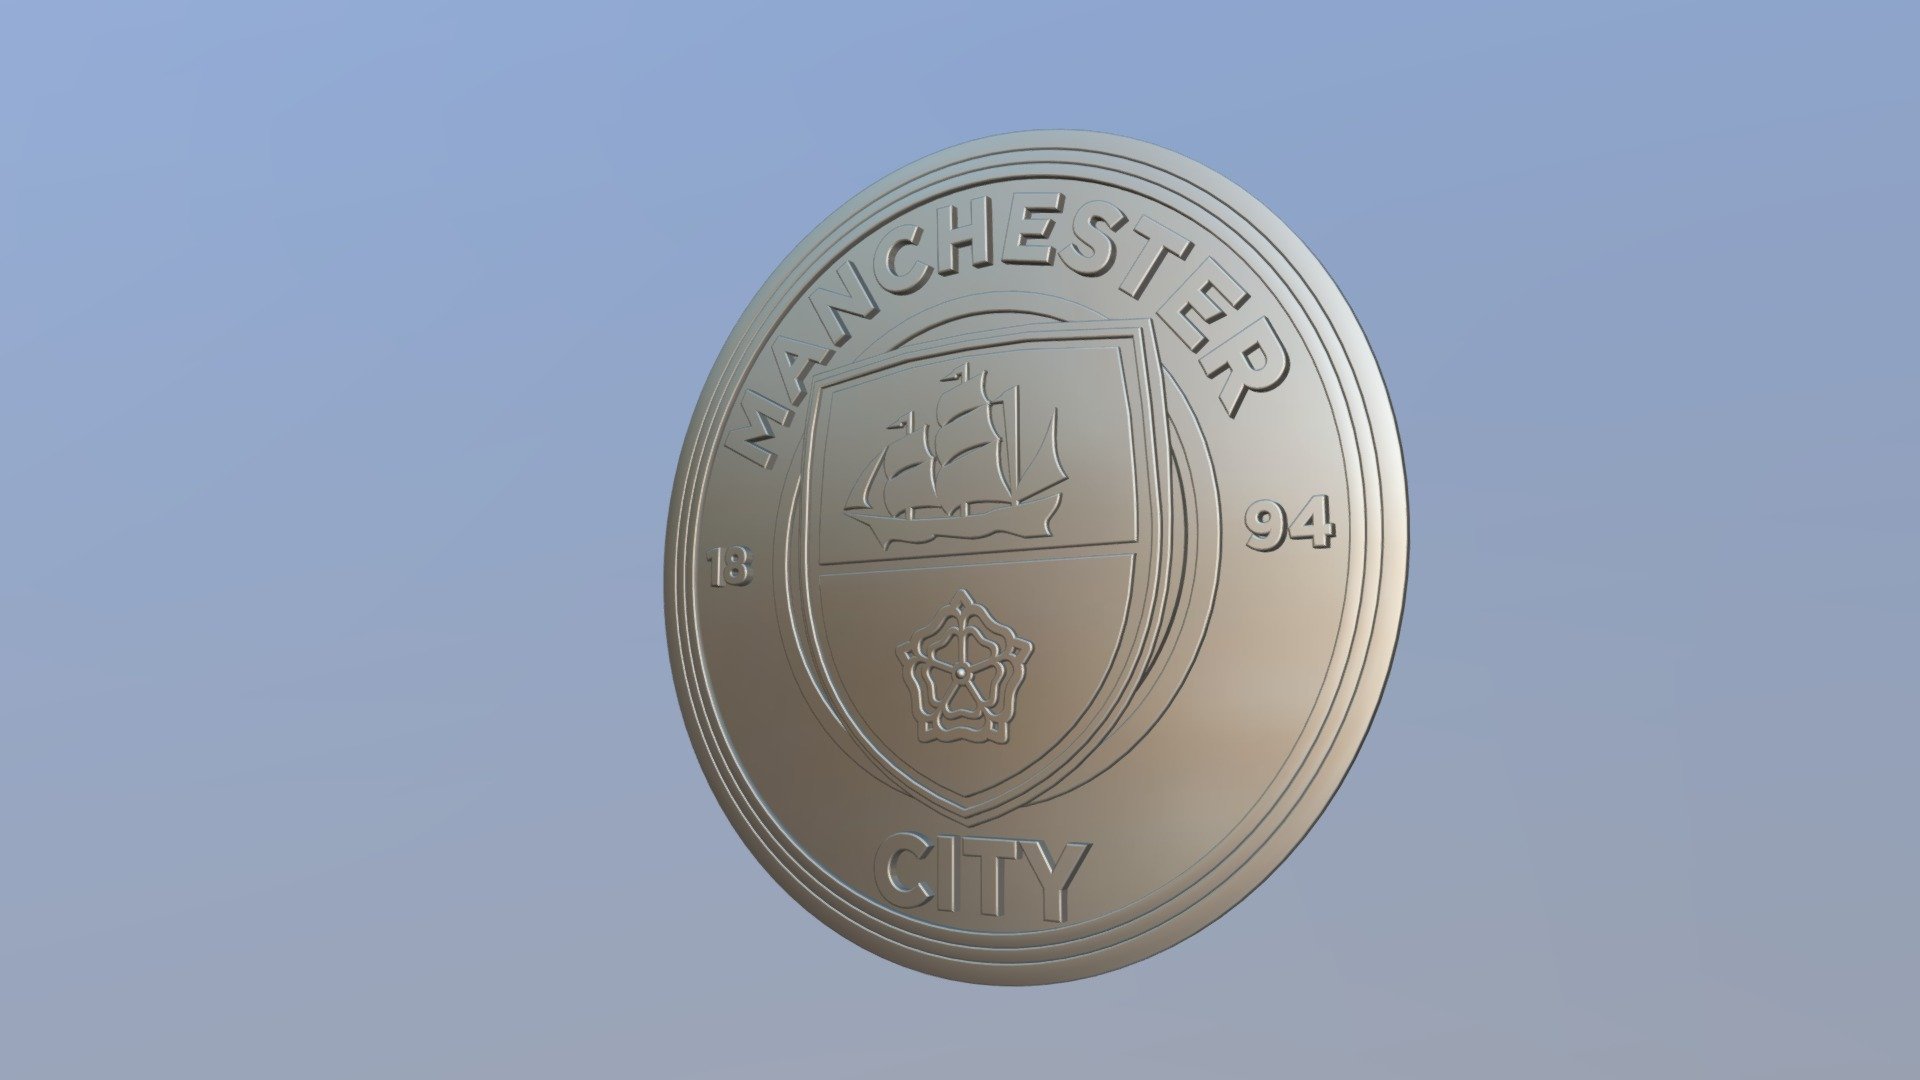 Manchester city Logo